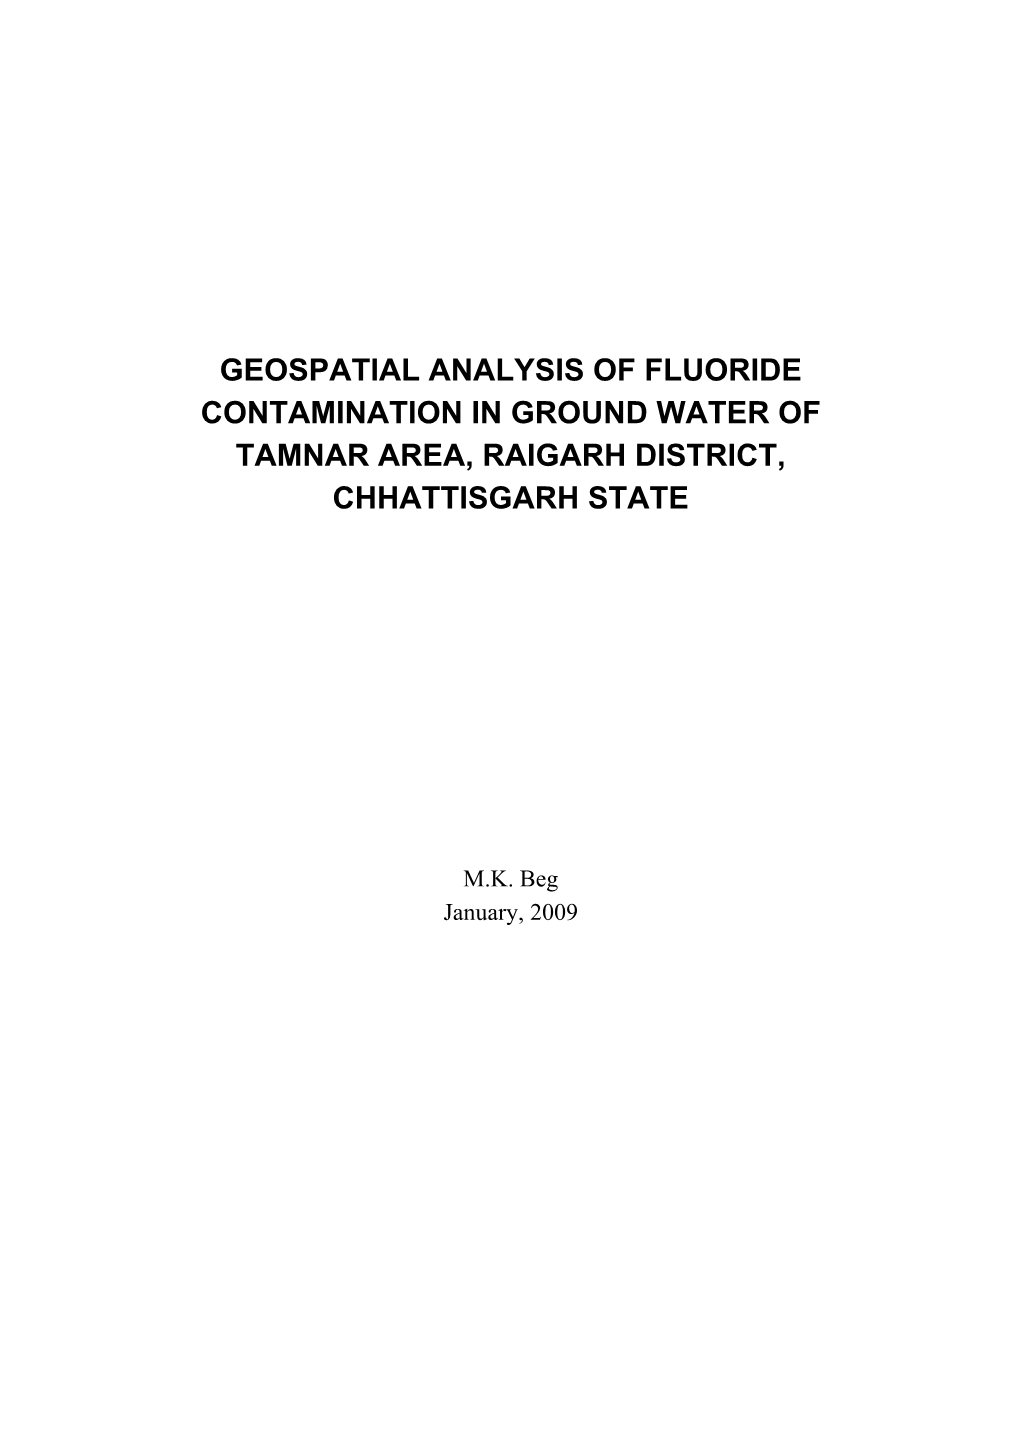 Geospatial Analysis of Fluoride Contamination in Ground Water of Tamnar Area, Raigarh District, Chhattisgarh State